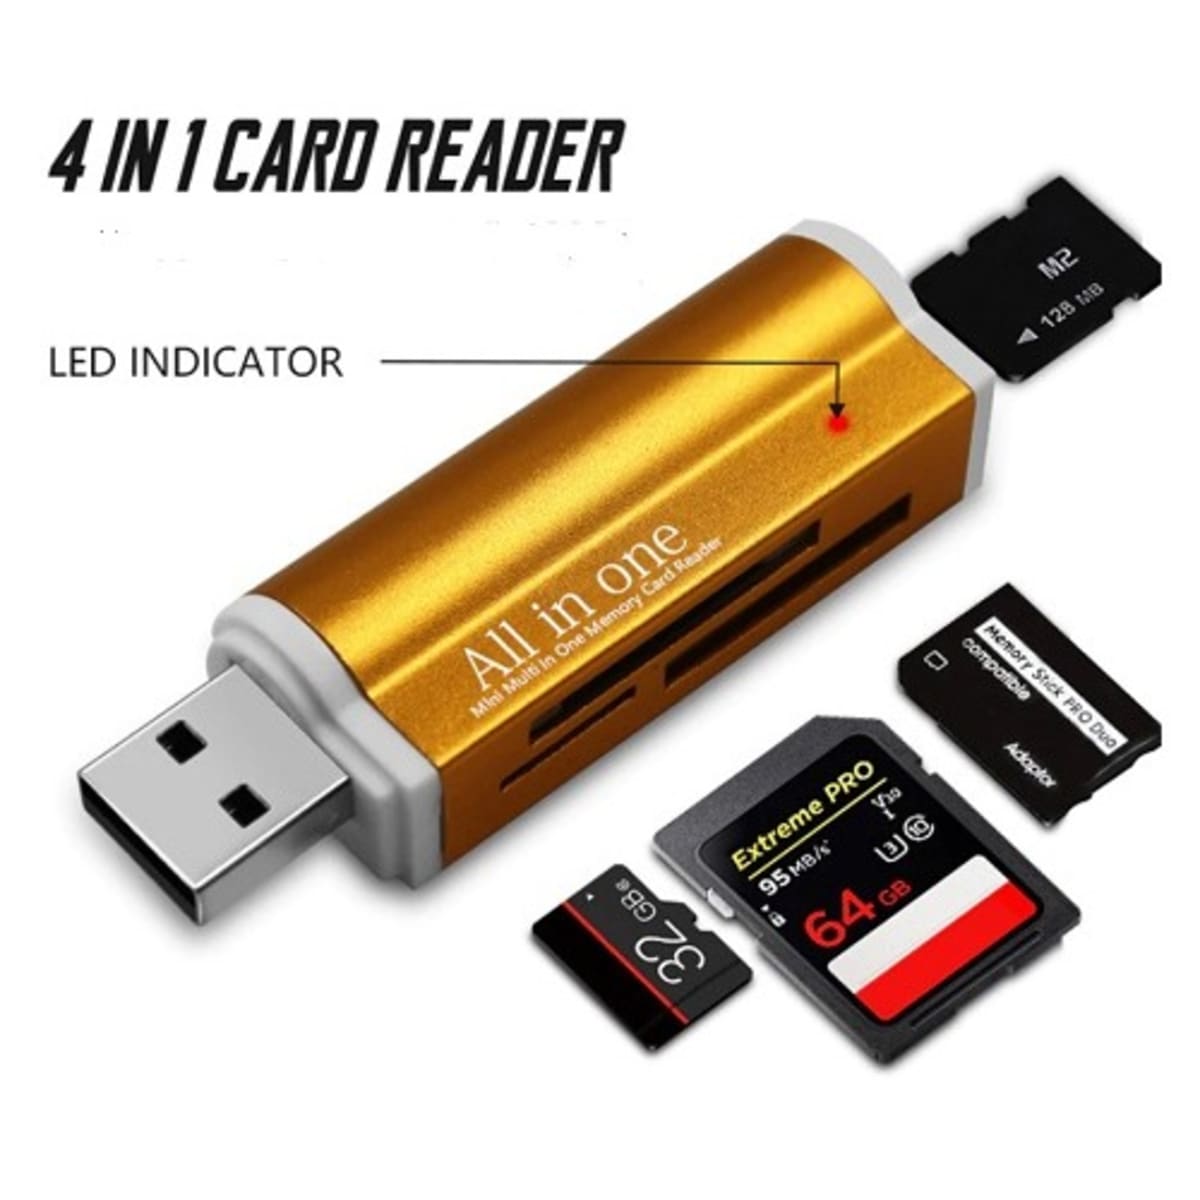 frivillig Byttehandel bluse All In 1 Multi Usb Memory Card Reader Adapter | Konga Online Shopping